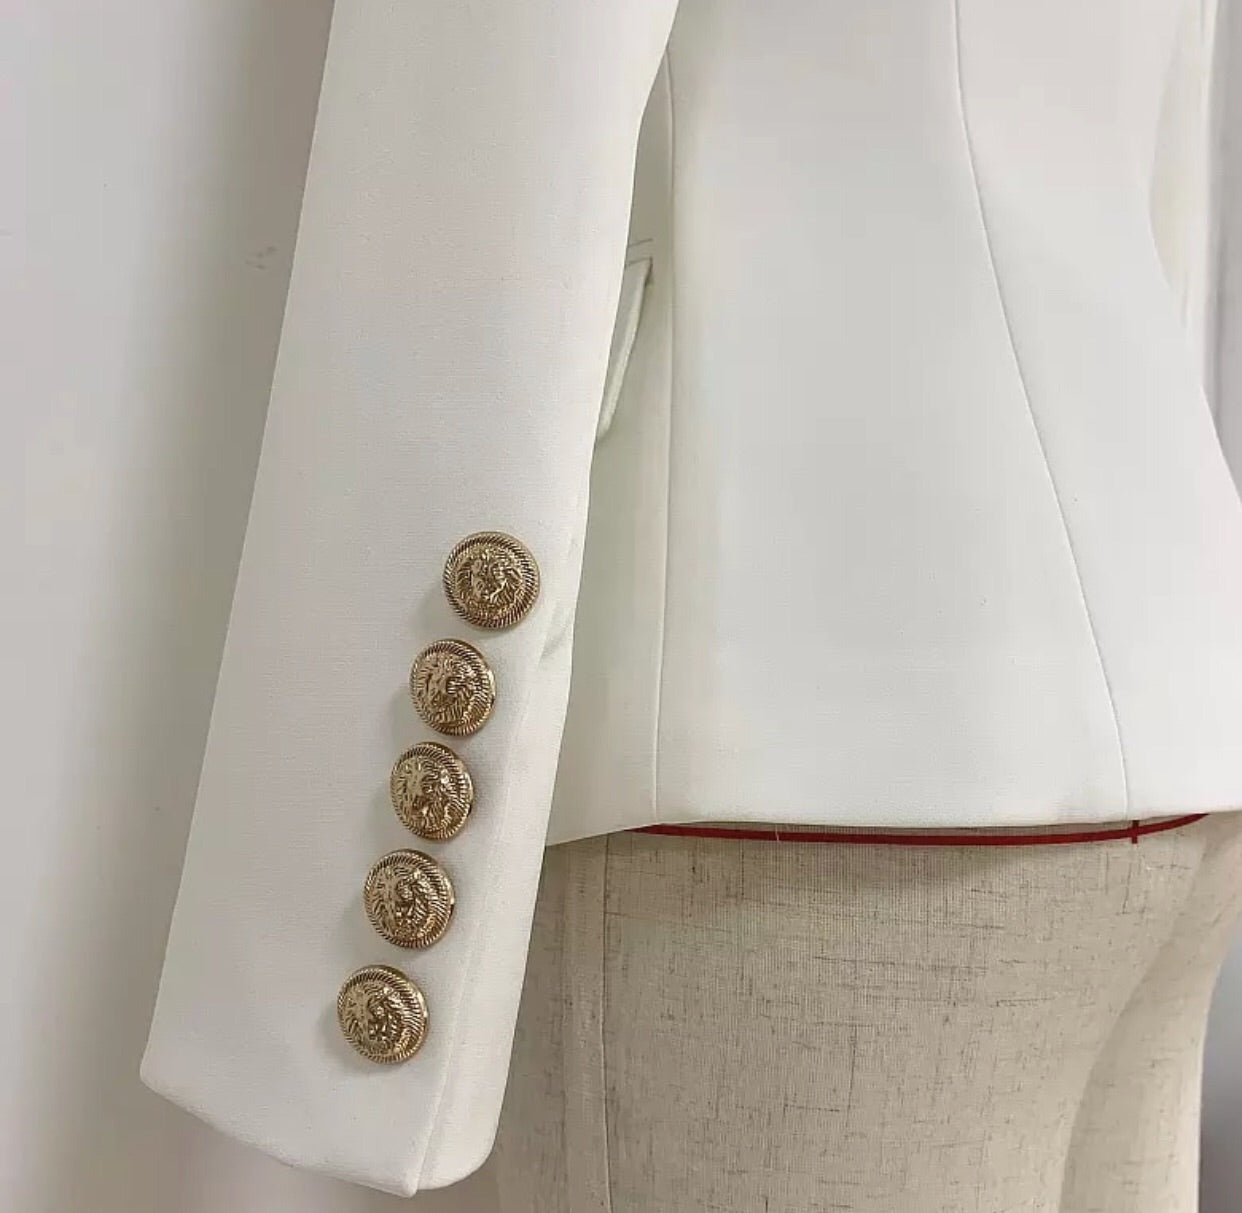 Collar Button Blazer - White